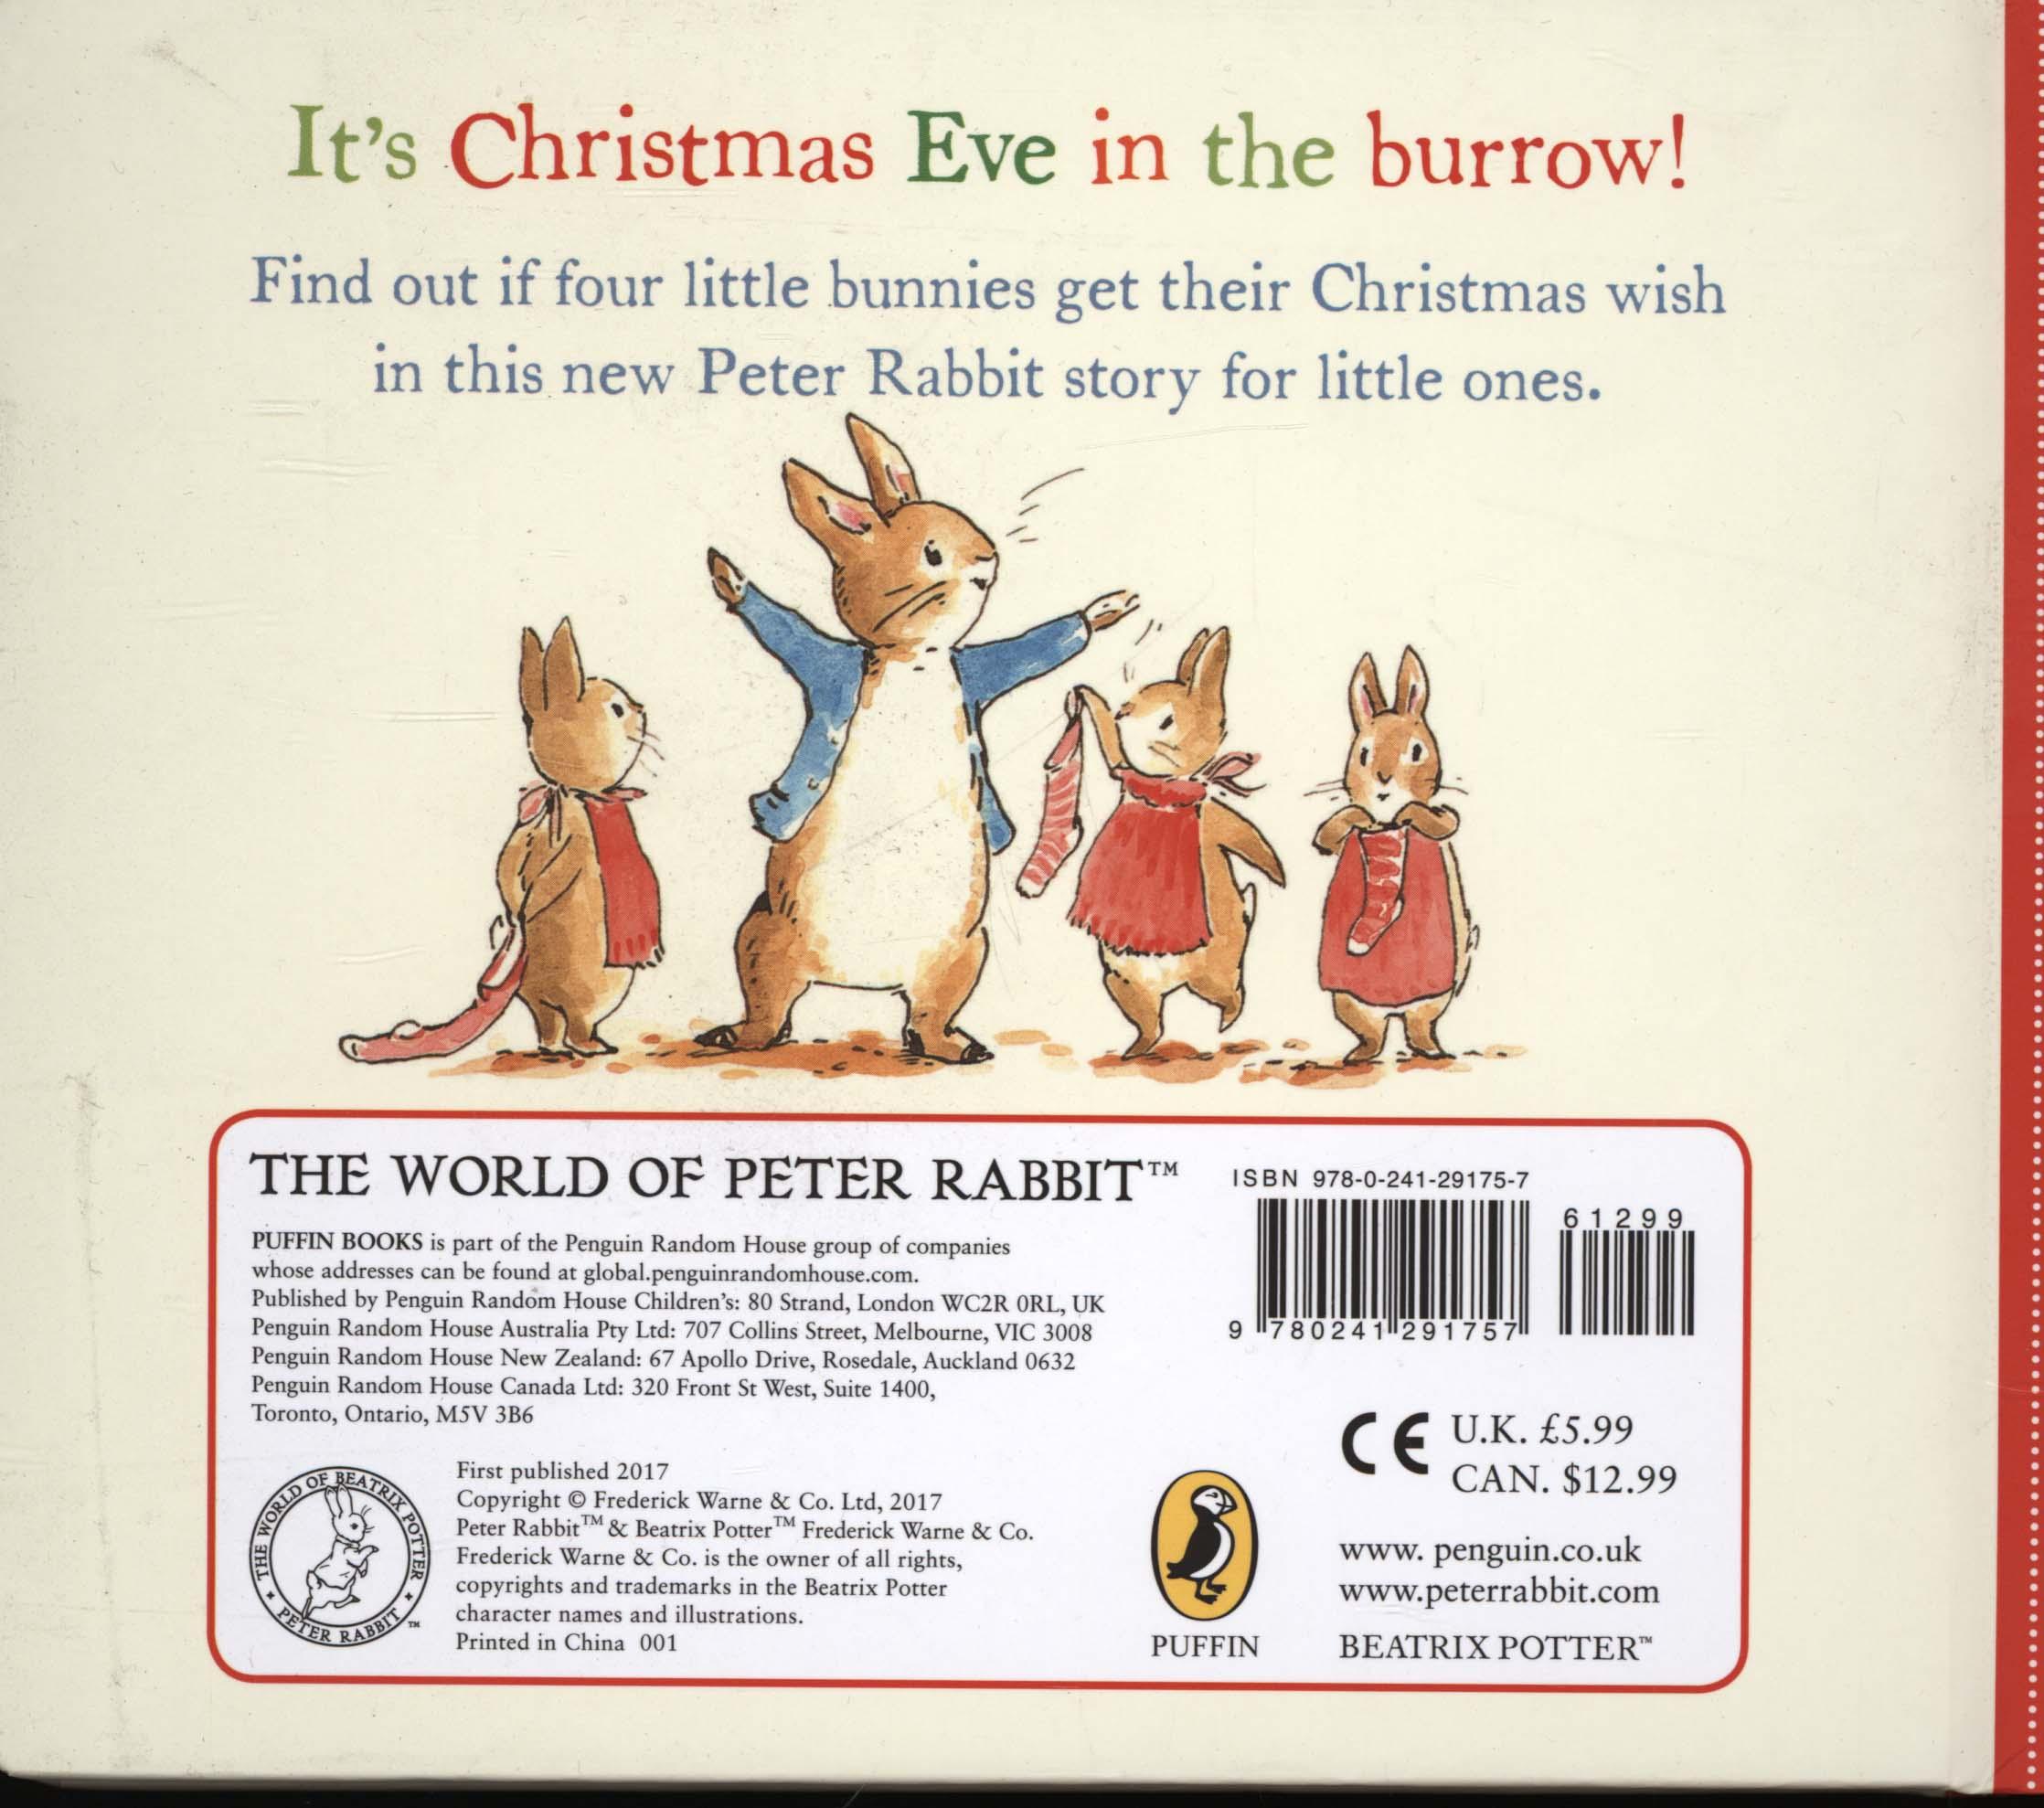 Peter Rabbit: A Christmas Wish